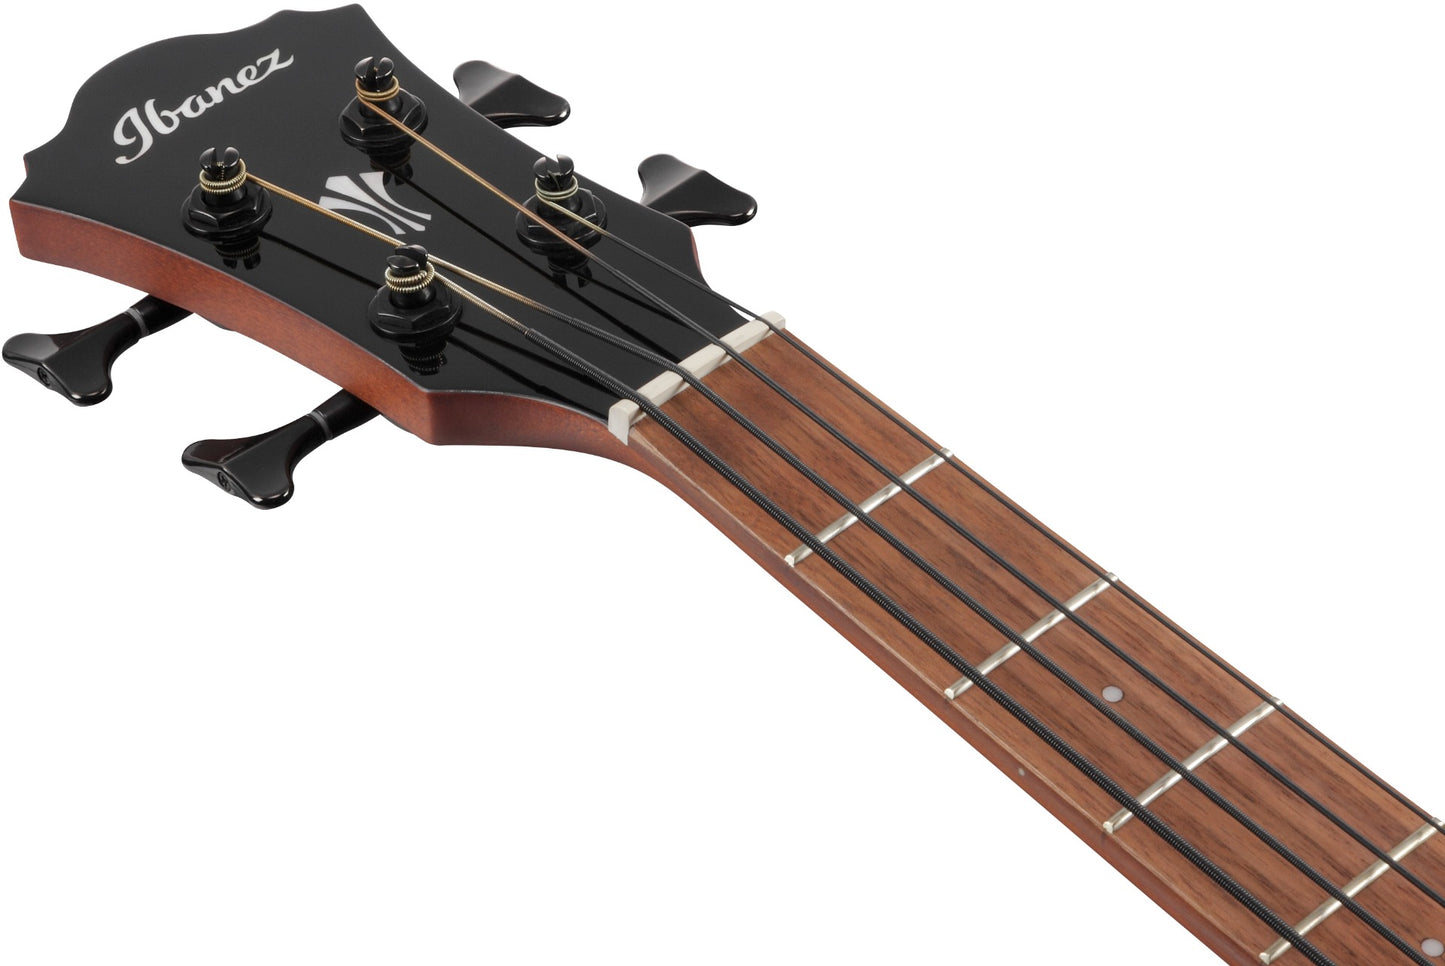 Ibanez AEGB24EBKH Acoustic Electric Bass Guitar - Black High Gloss